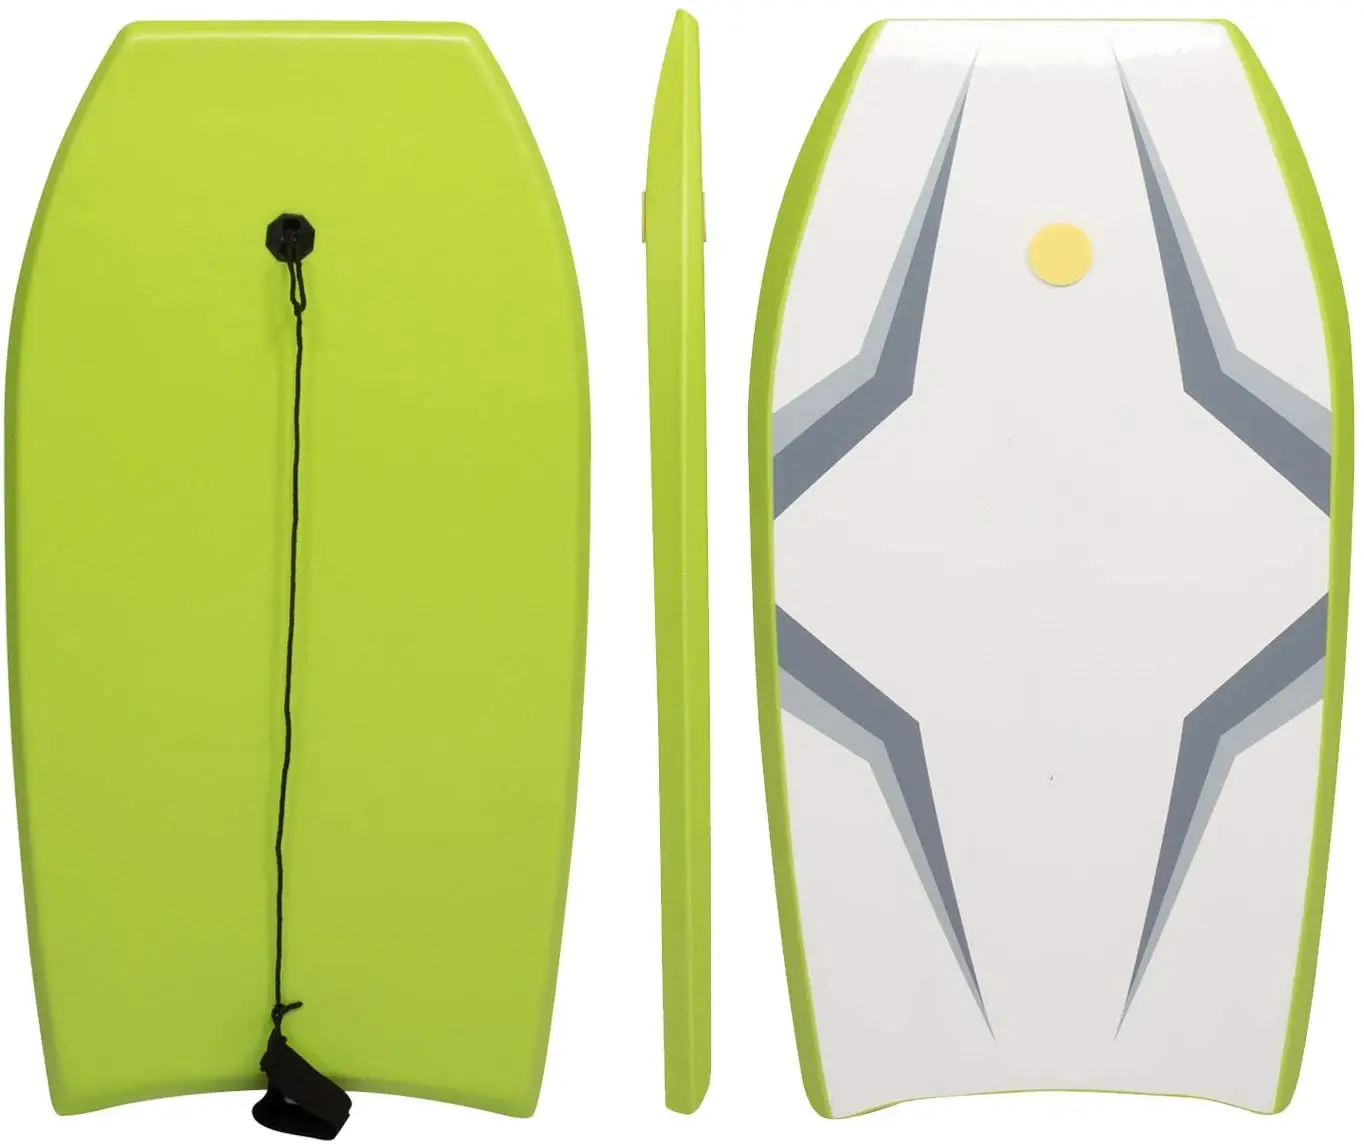 Factory sales Lightweight Body board Premium Wrist Leash 37' Body Board with EPS Core Suit